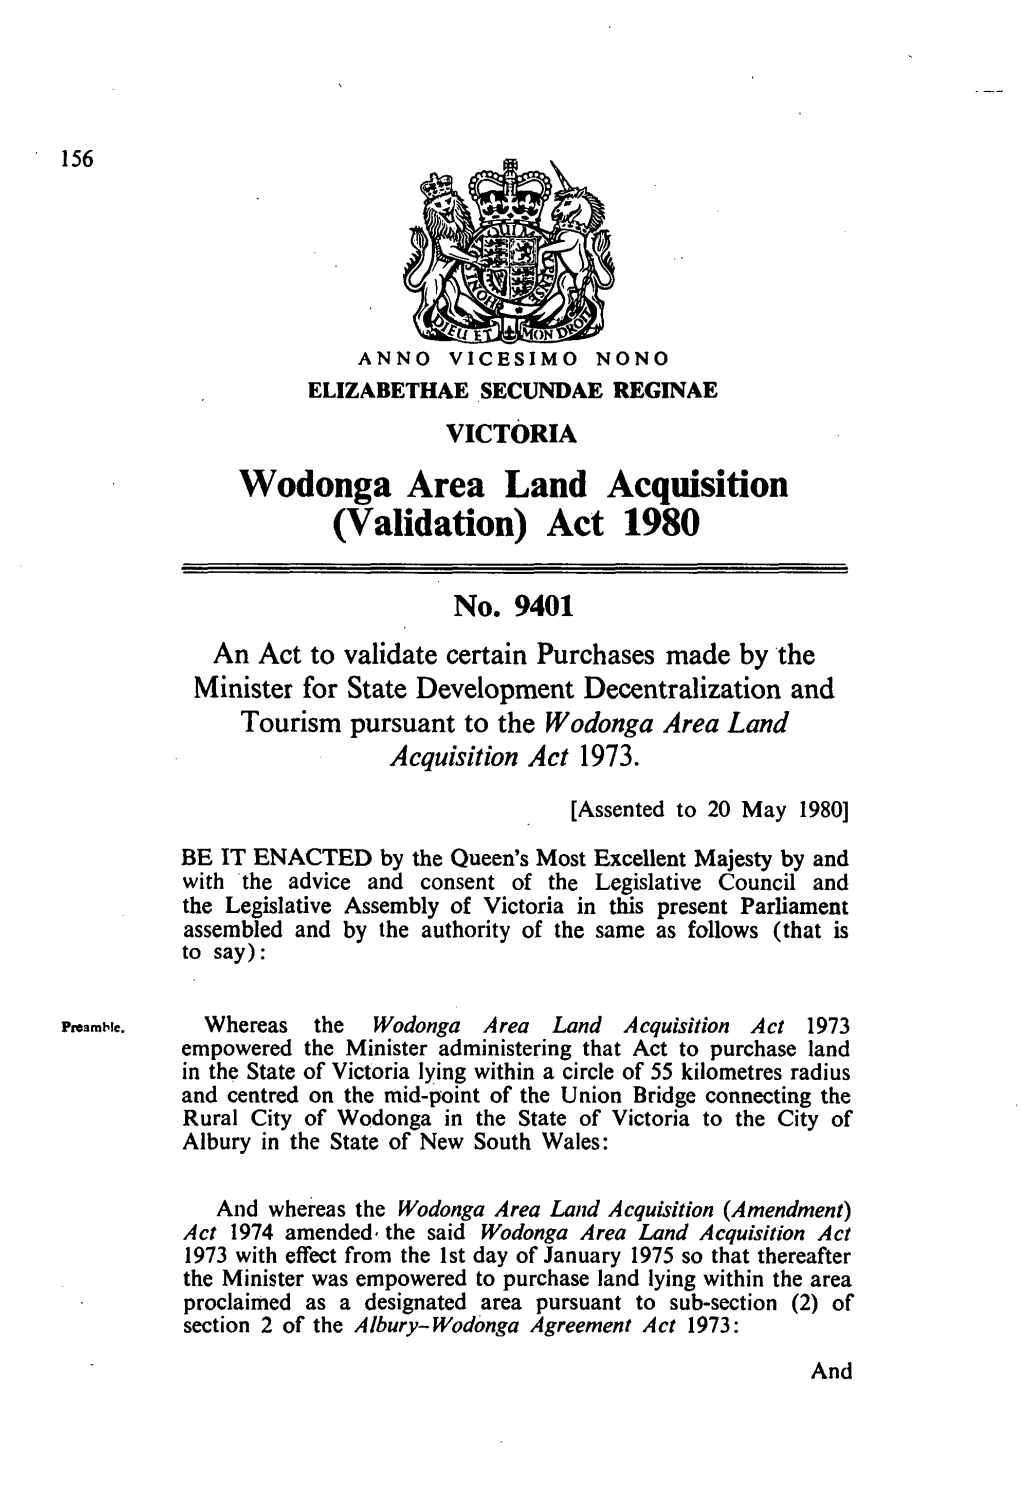 Wodonga Area Land Acquisition (Validation) Act 1980